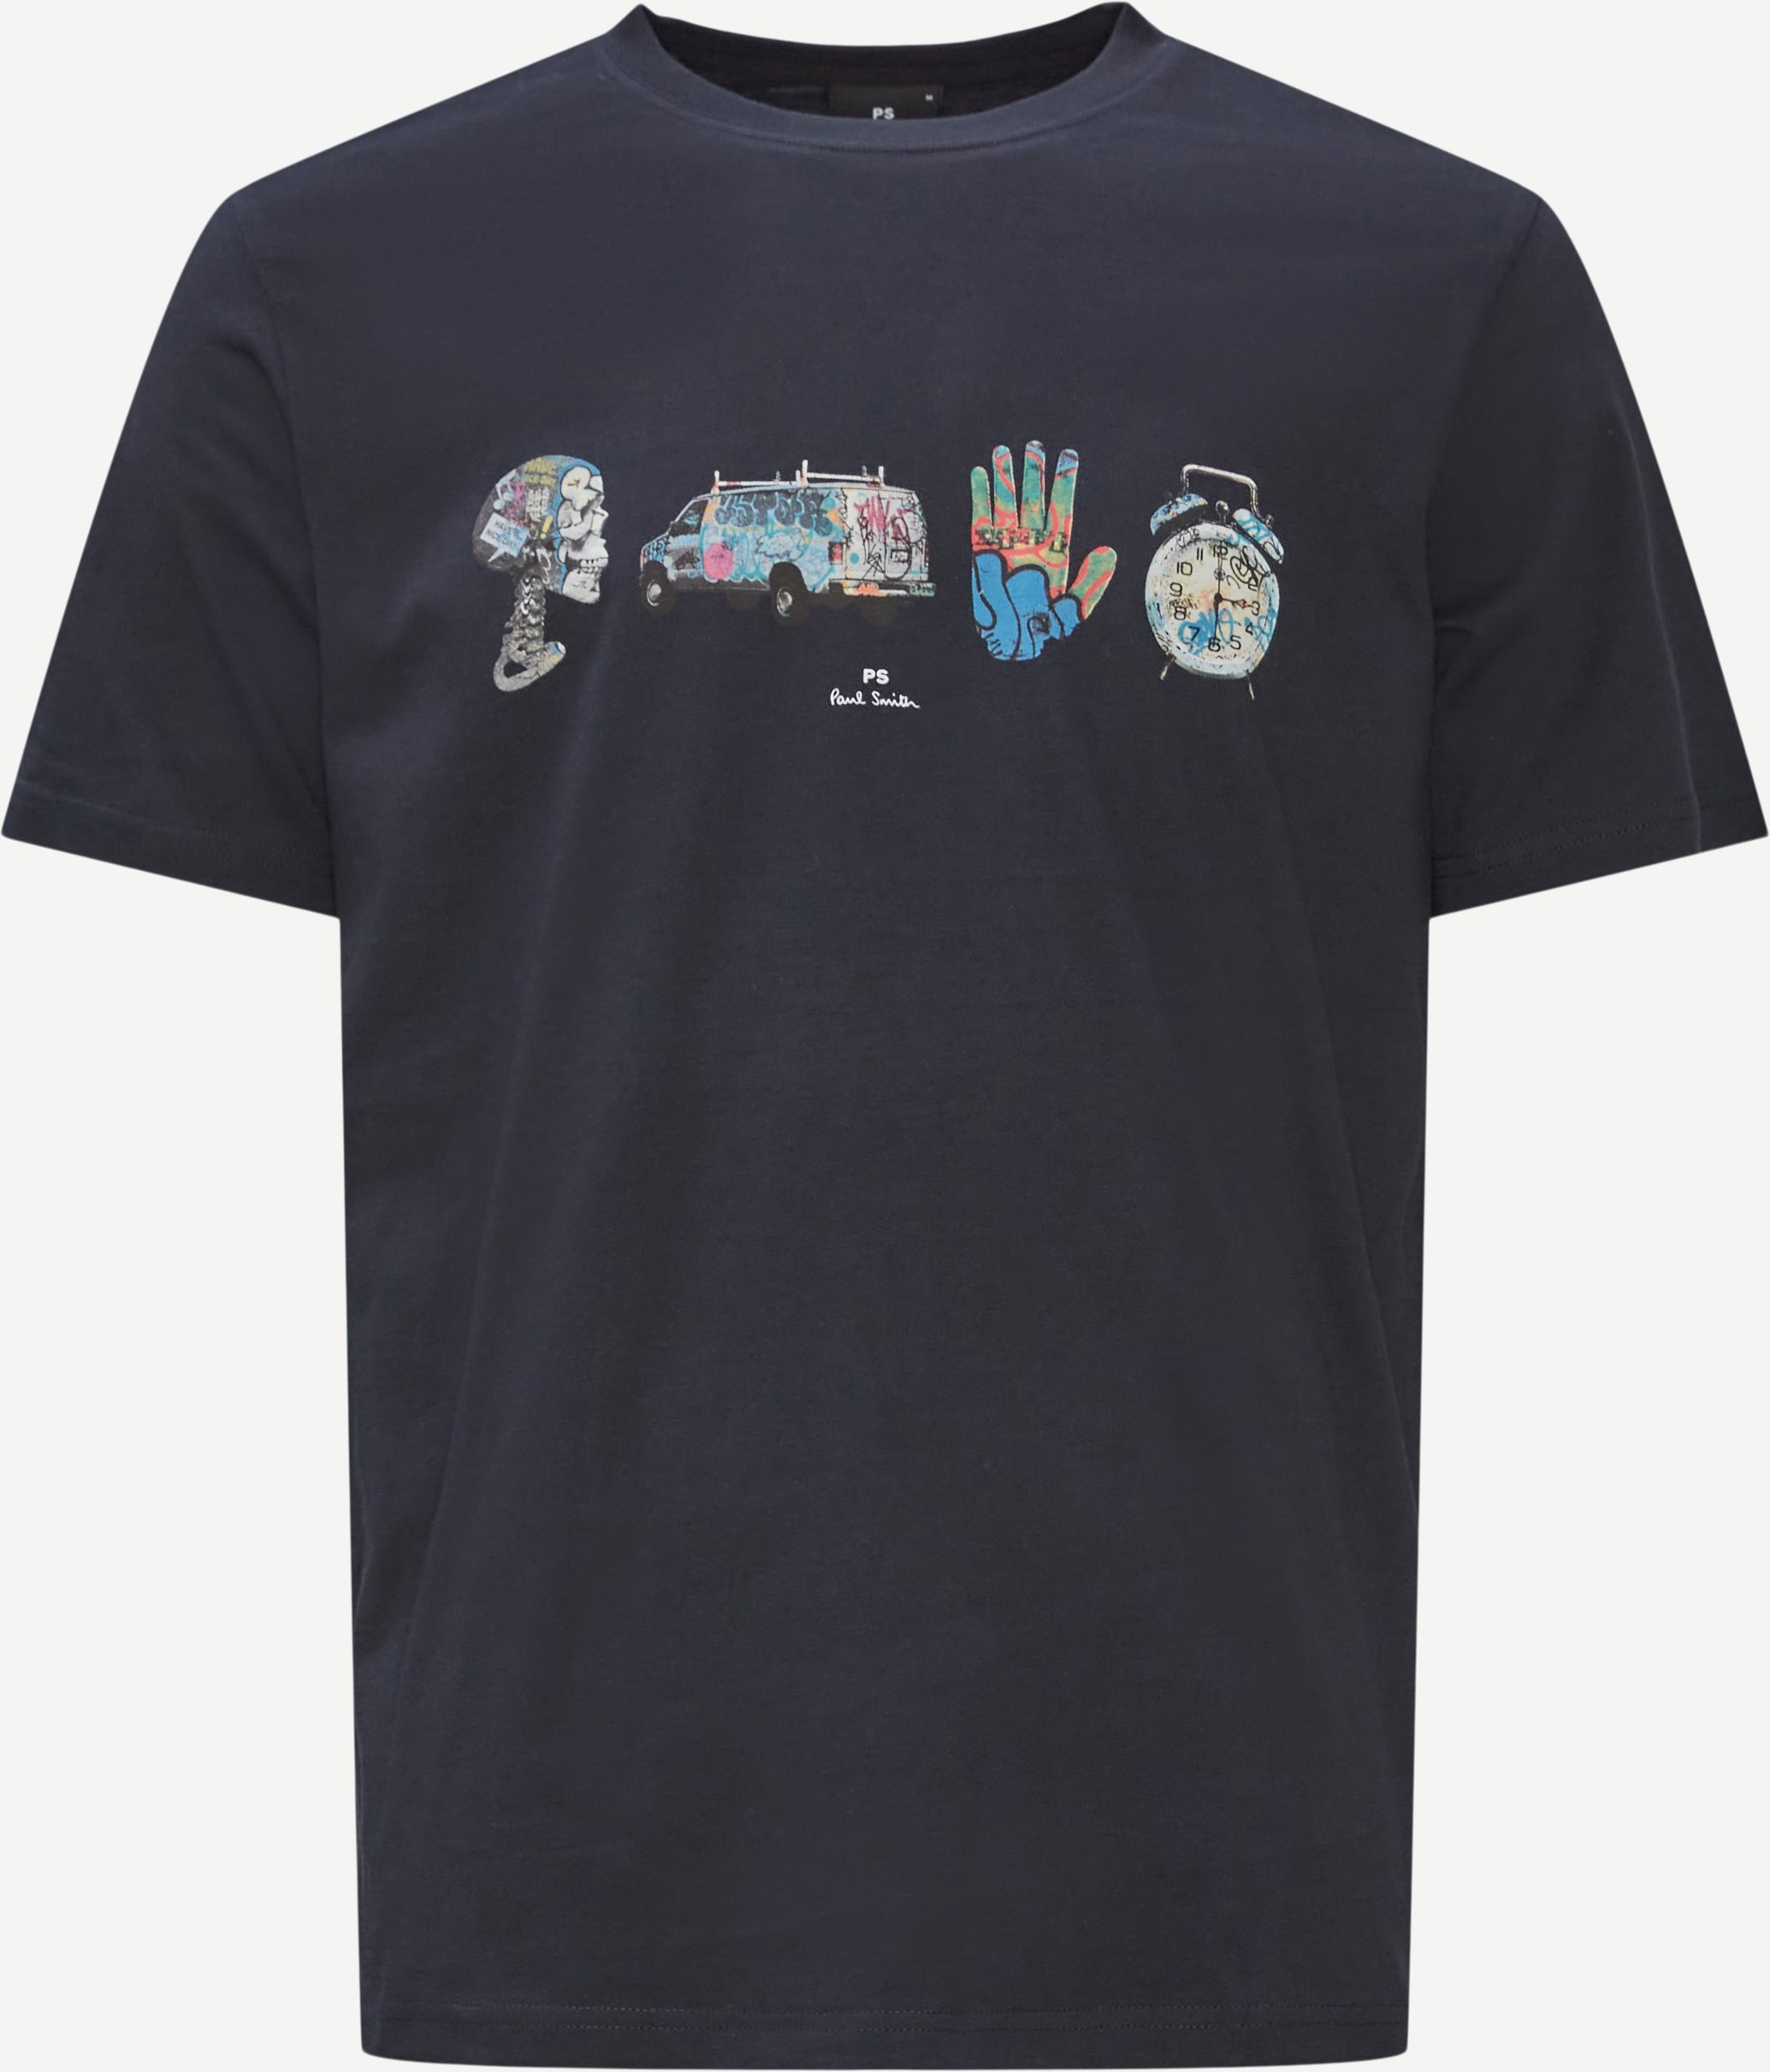 Graffititröja - T-shirts - Regular fit - Blå